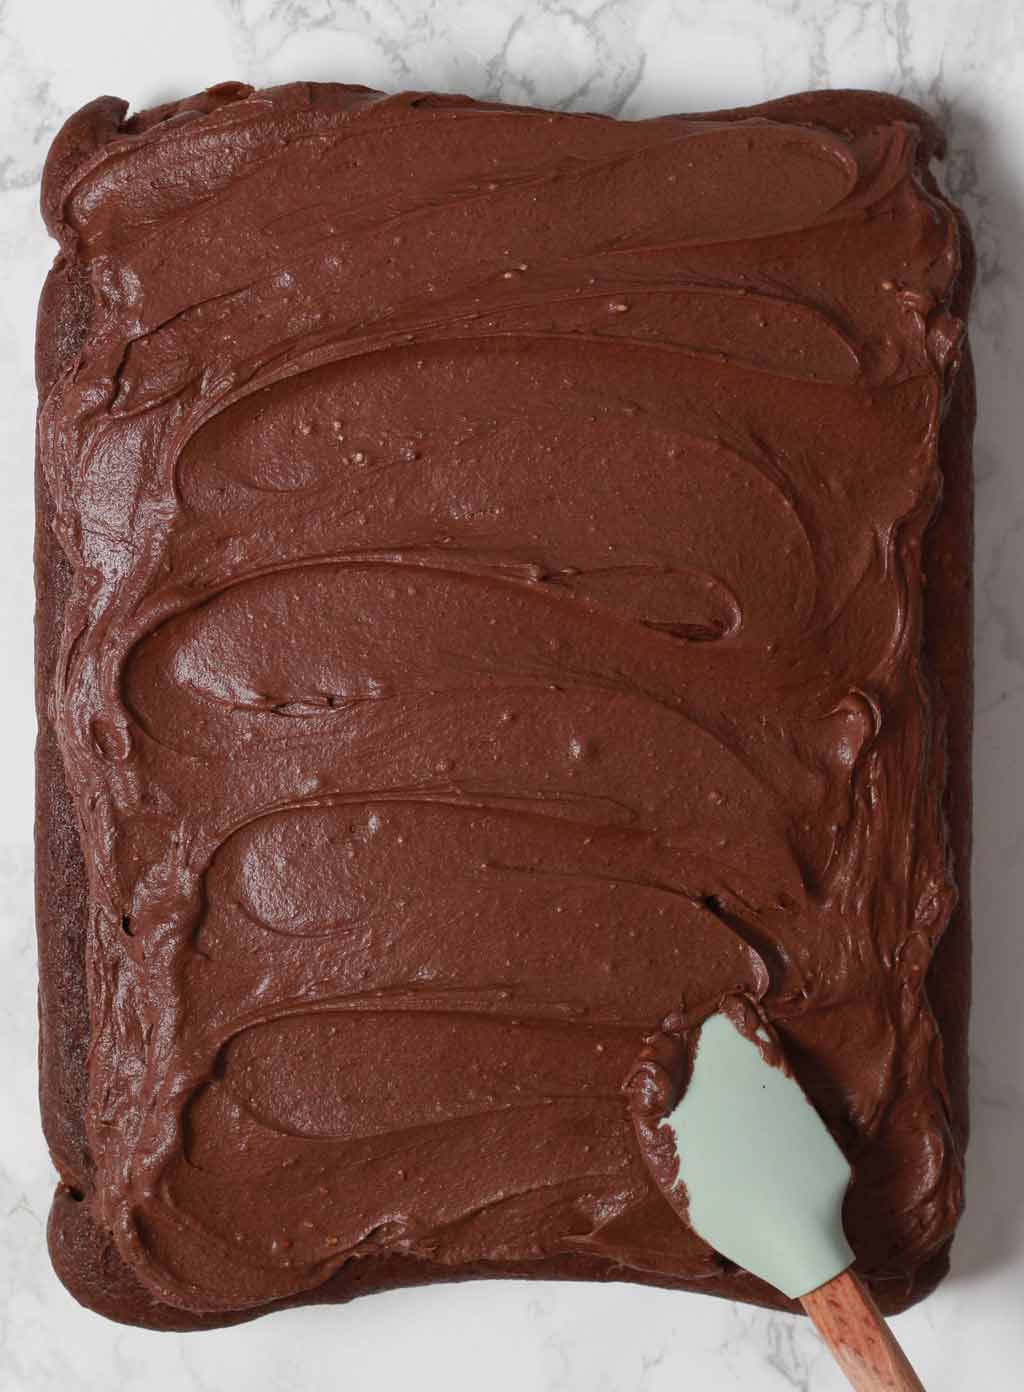 Chocolate Buttercream On Top Of Cake